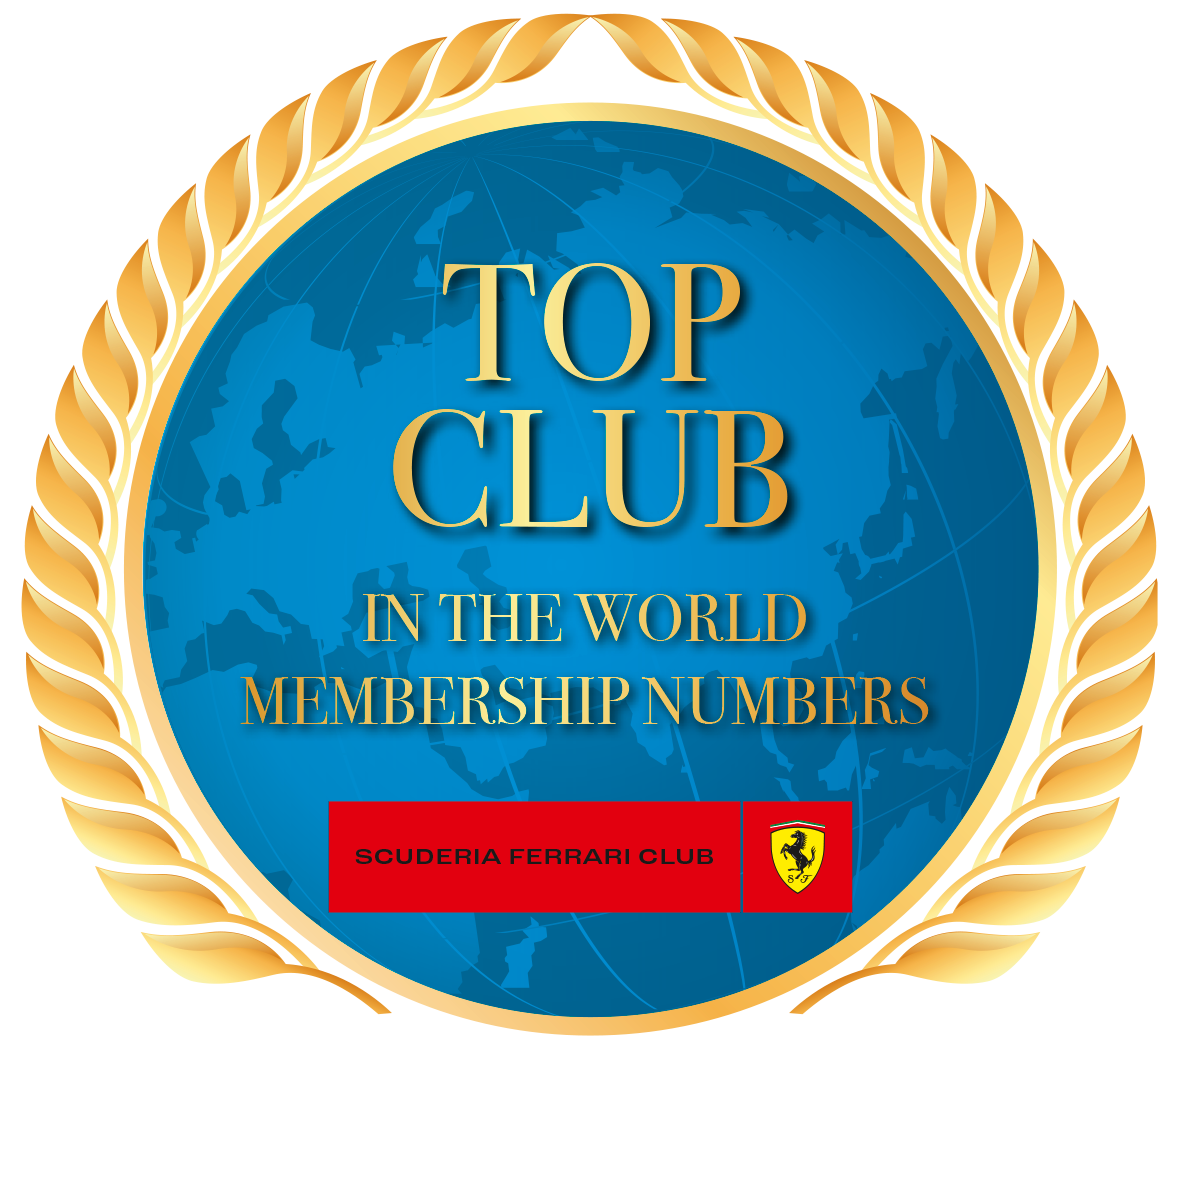 TOP CLUB in the world membership numbers